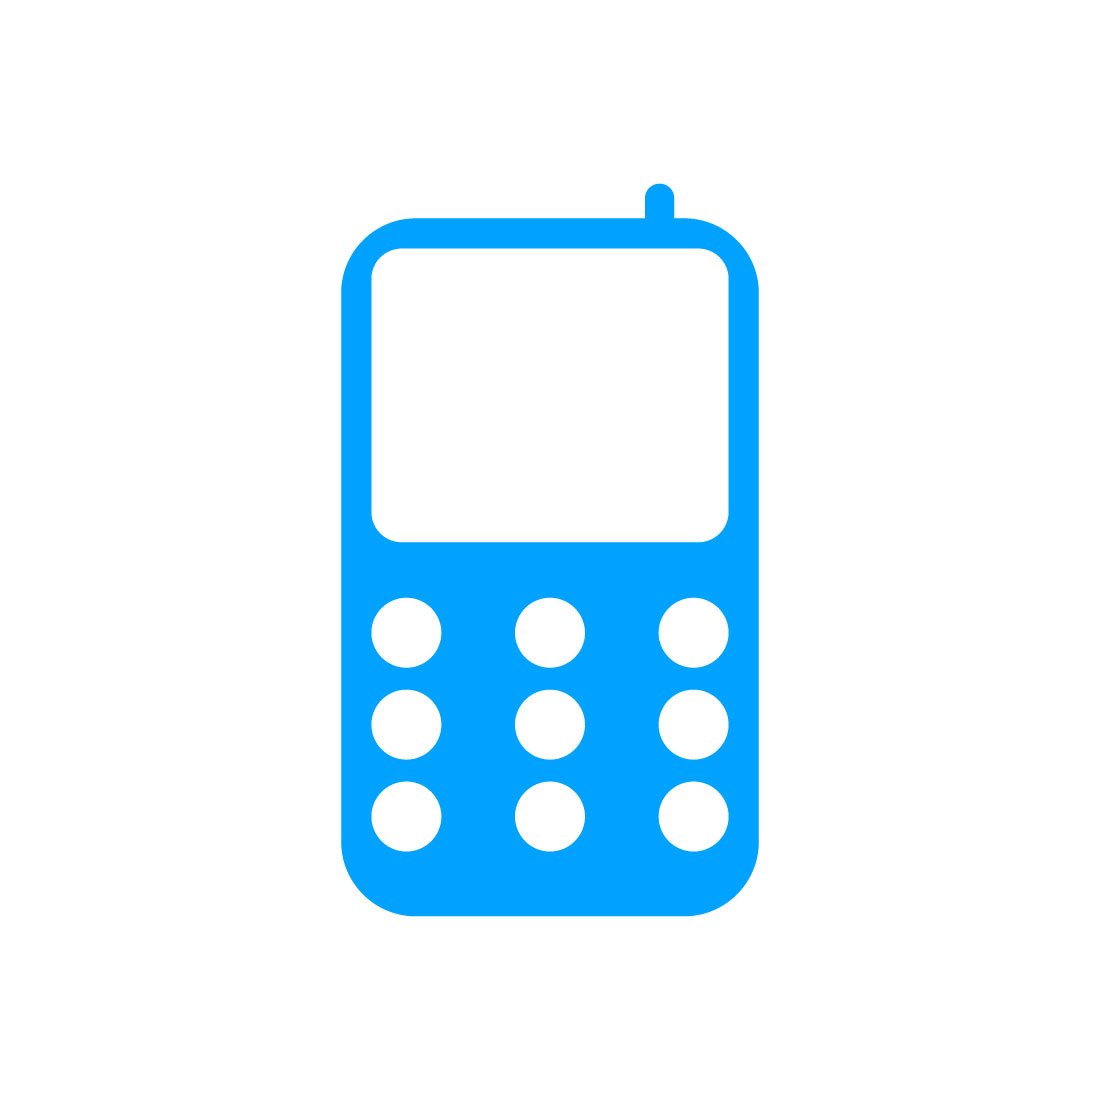 Modern Mobile Phone logo design, Vector design template cover image.